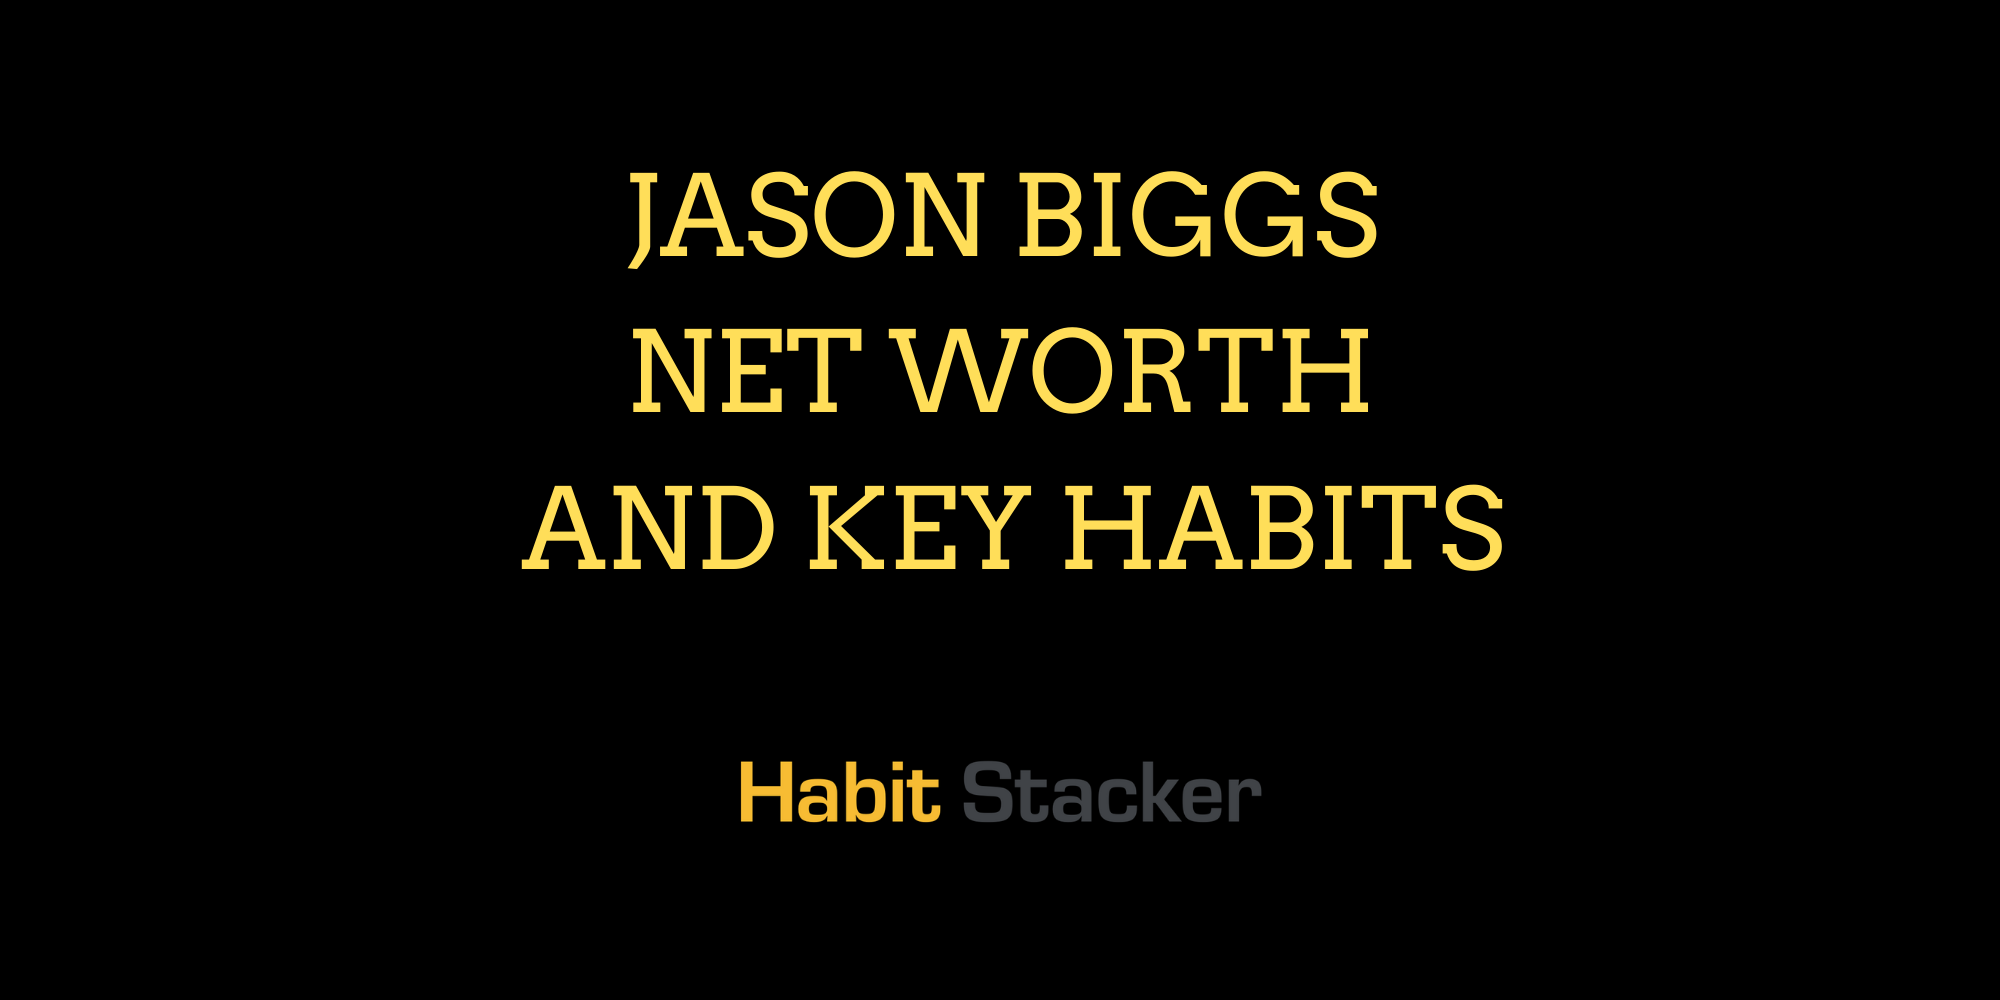 Jason Biggs Net Worth And Key Habits